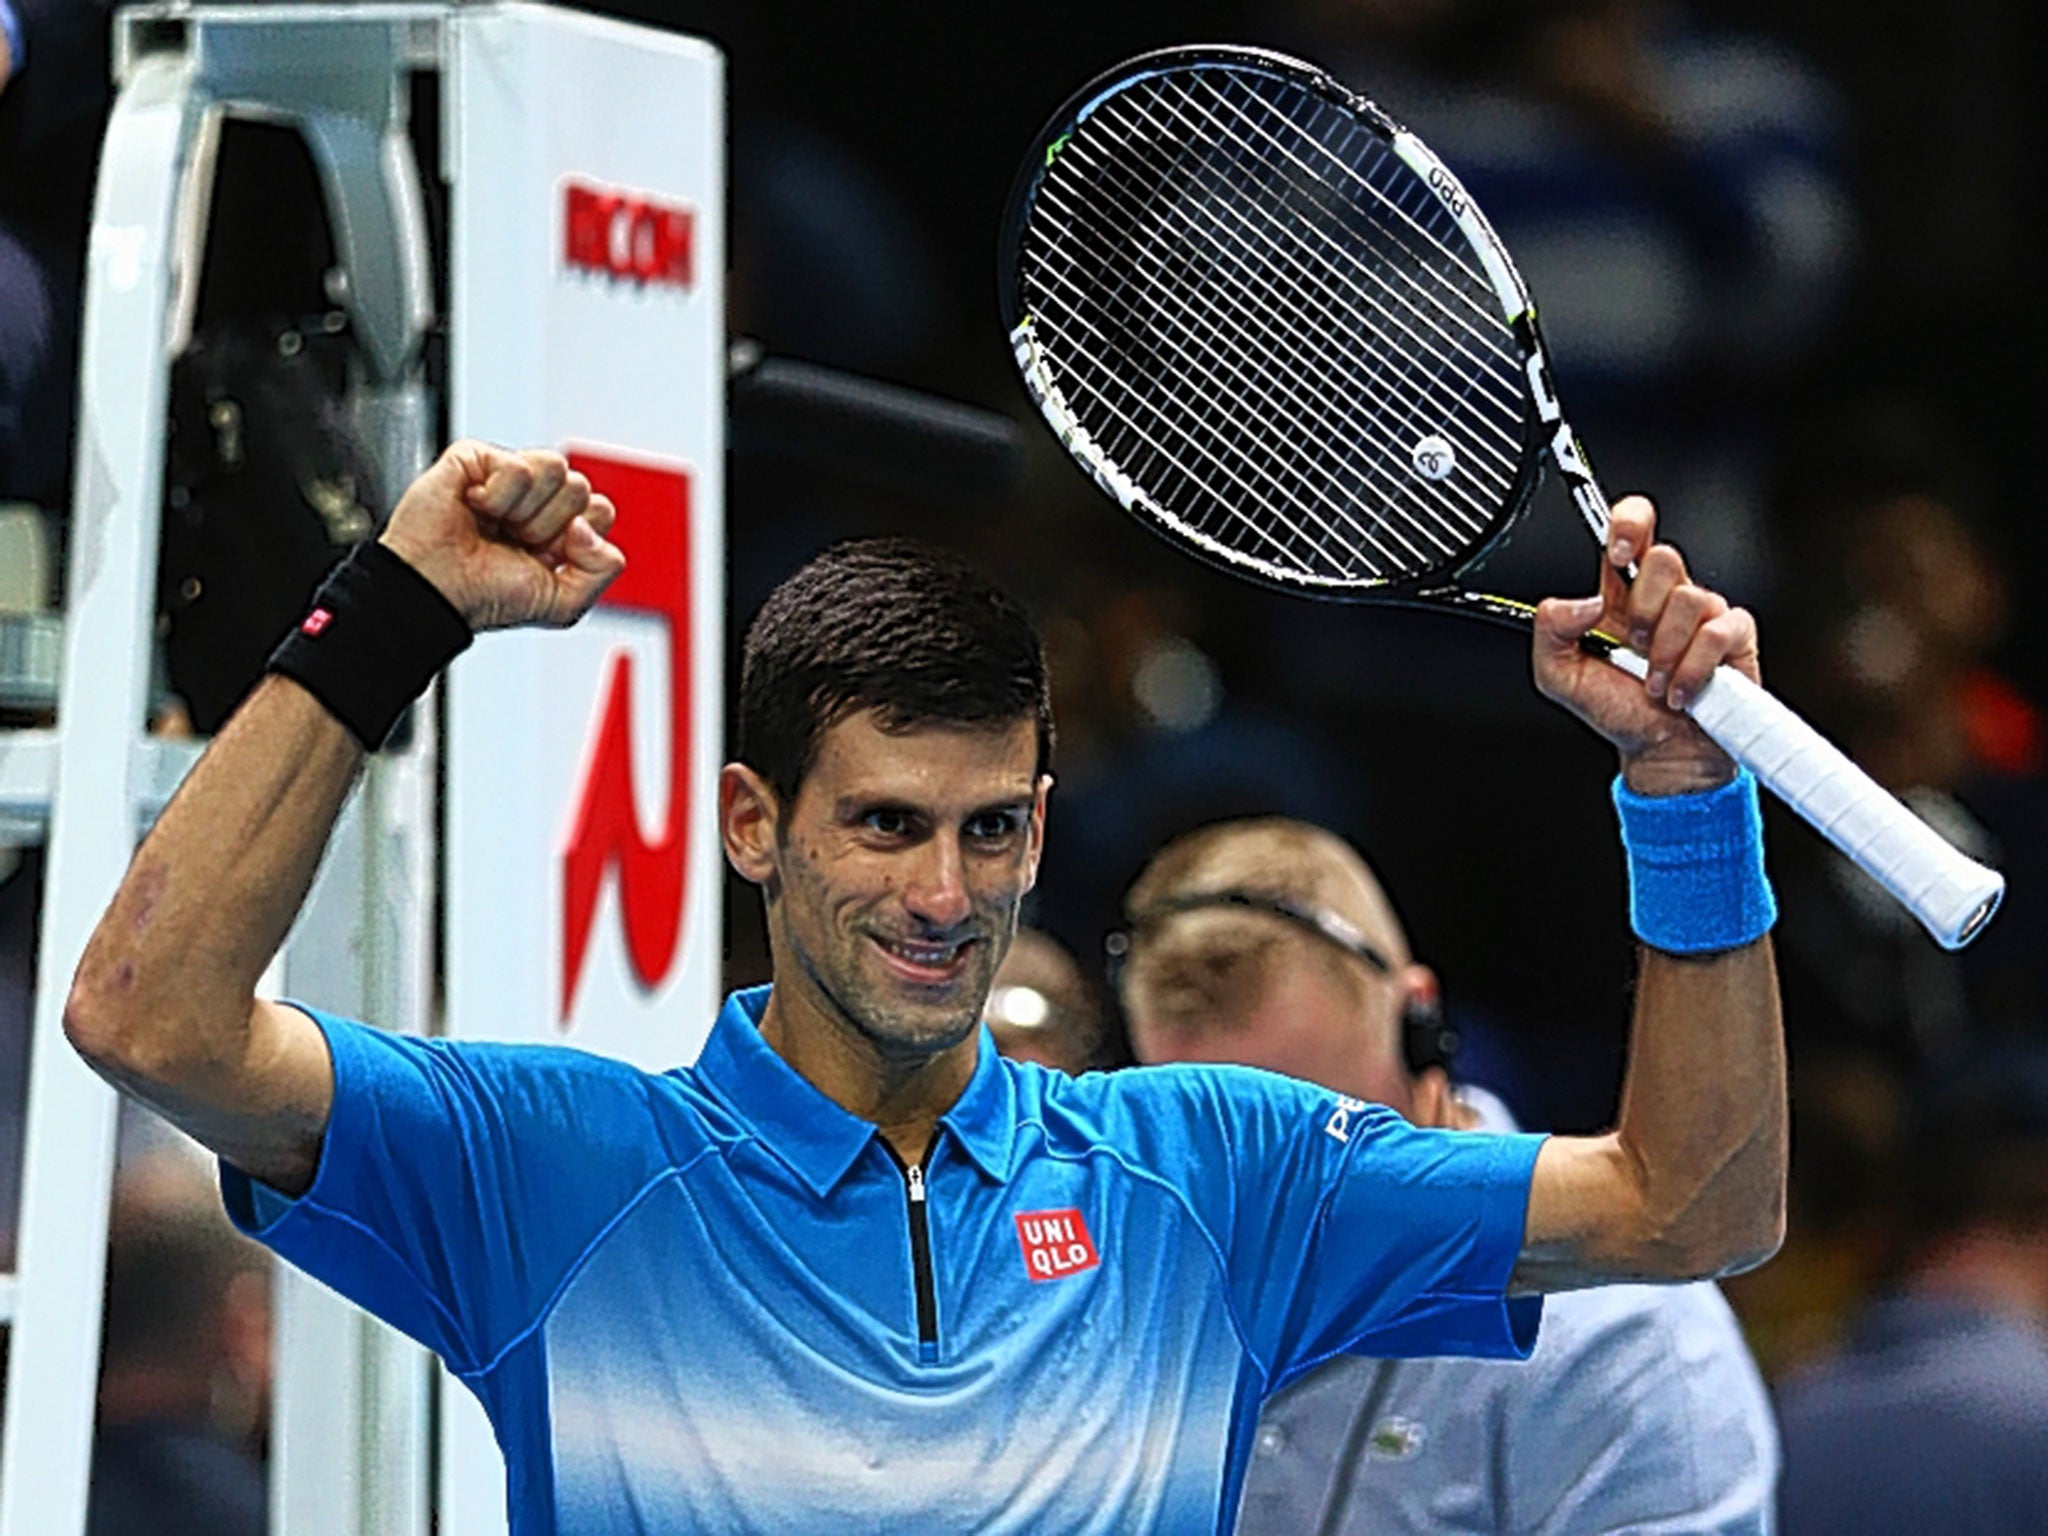 Novak Djokovic after his 6-1, 6-1 demolition of Kei Nishikori